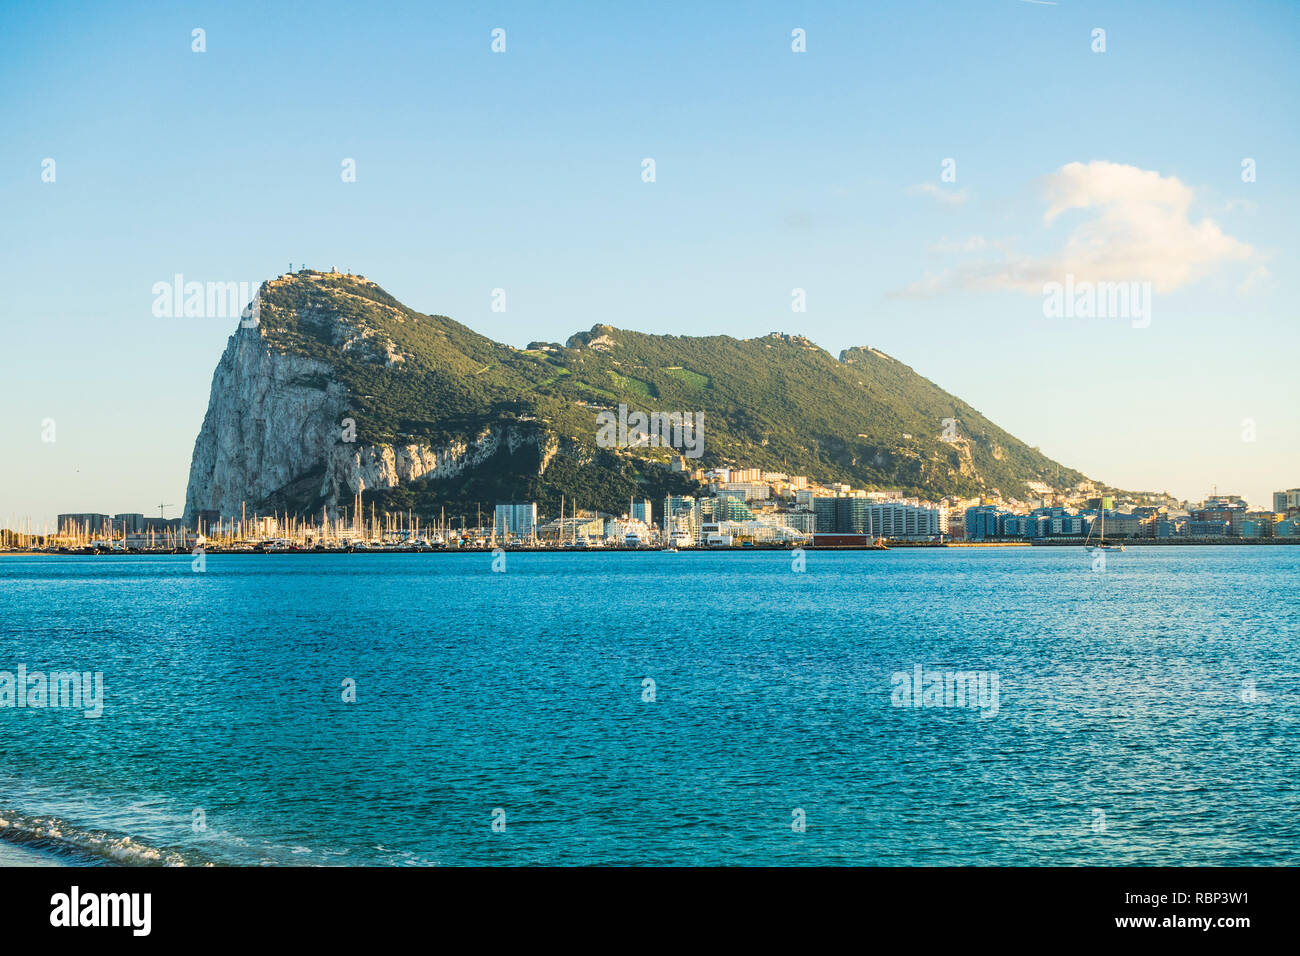 Gibraltar rock, Western face of the rock of Gibraltar from the Bay of Algeciras. The rock, British Overseas Territory, Gibraltar, Gib, UK. Stock Photo